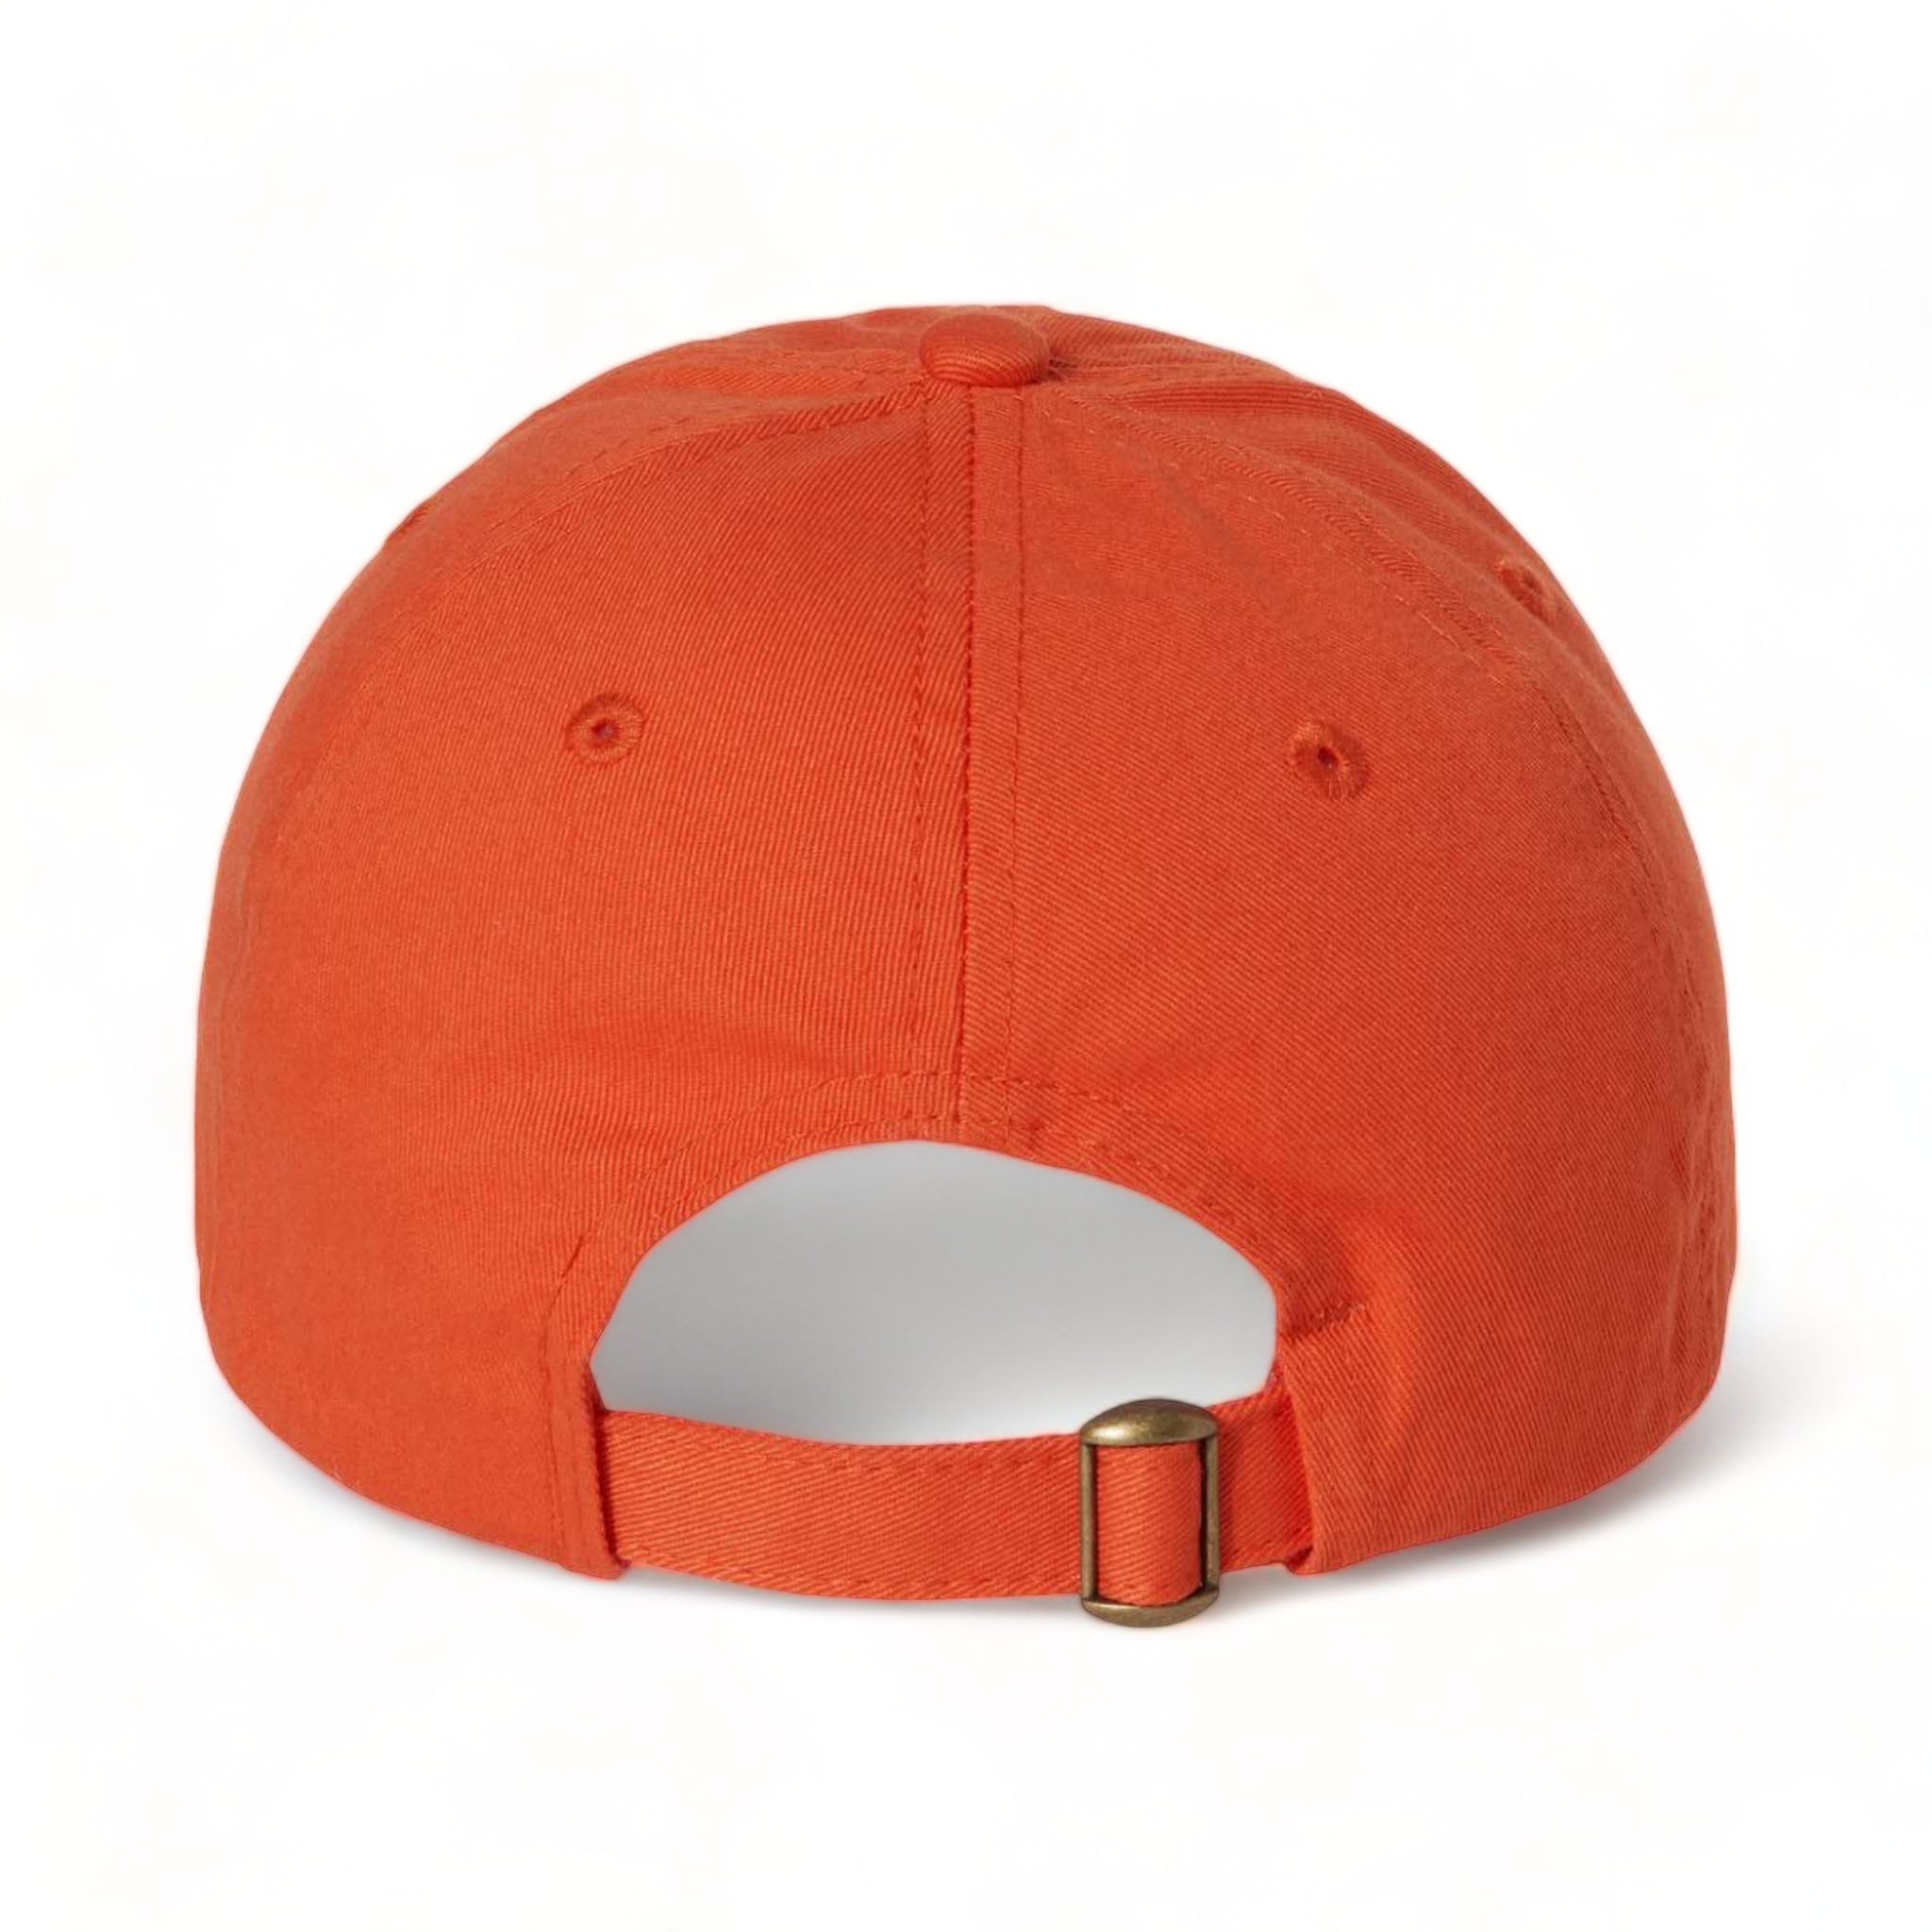 Back view of Valucap VC300A custom hat in orange